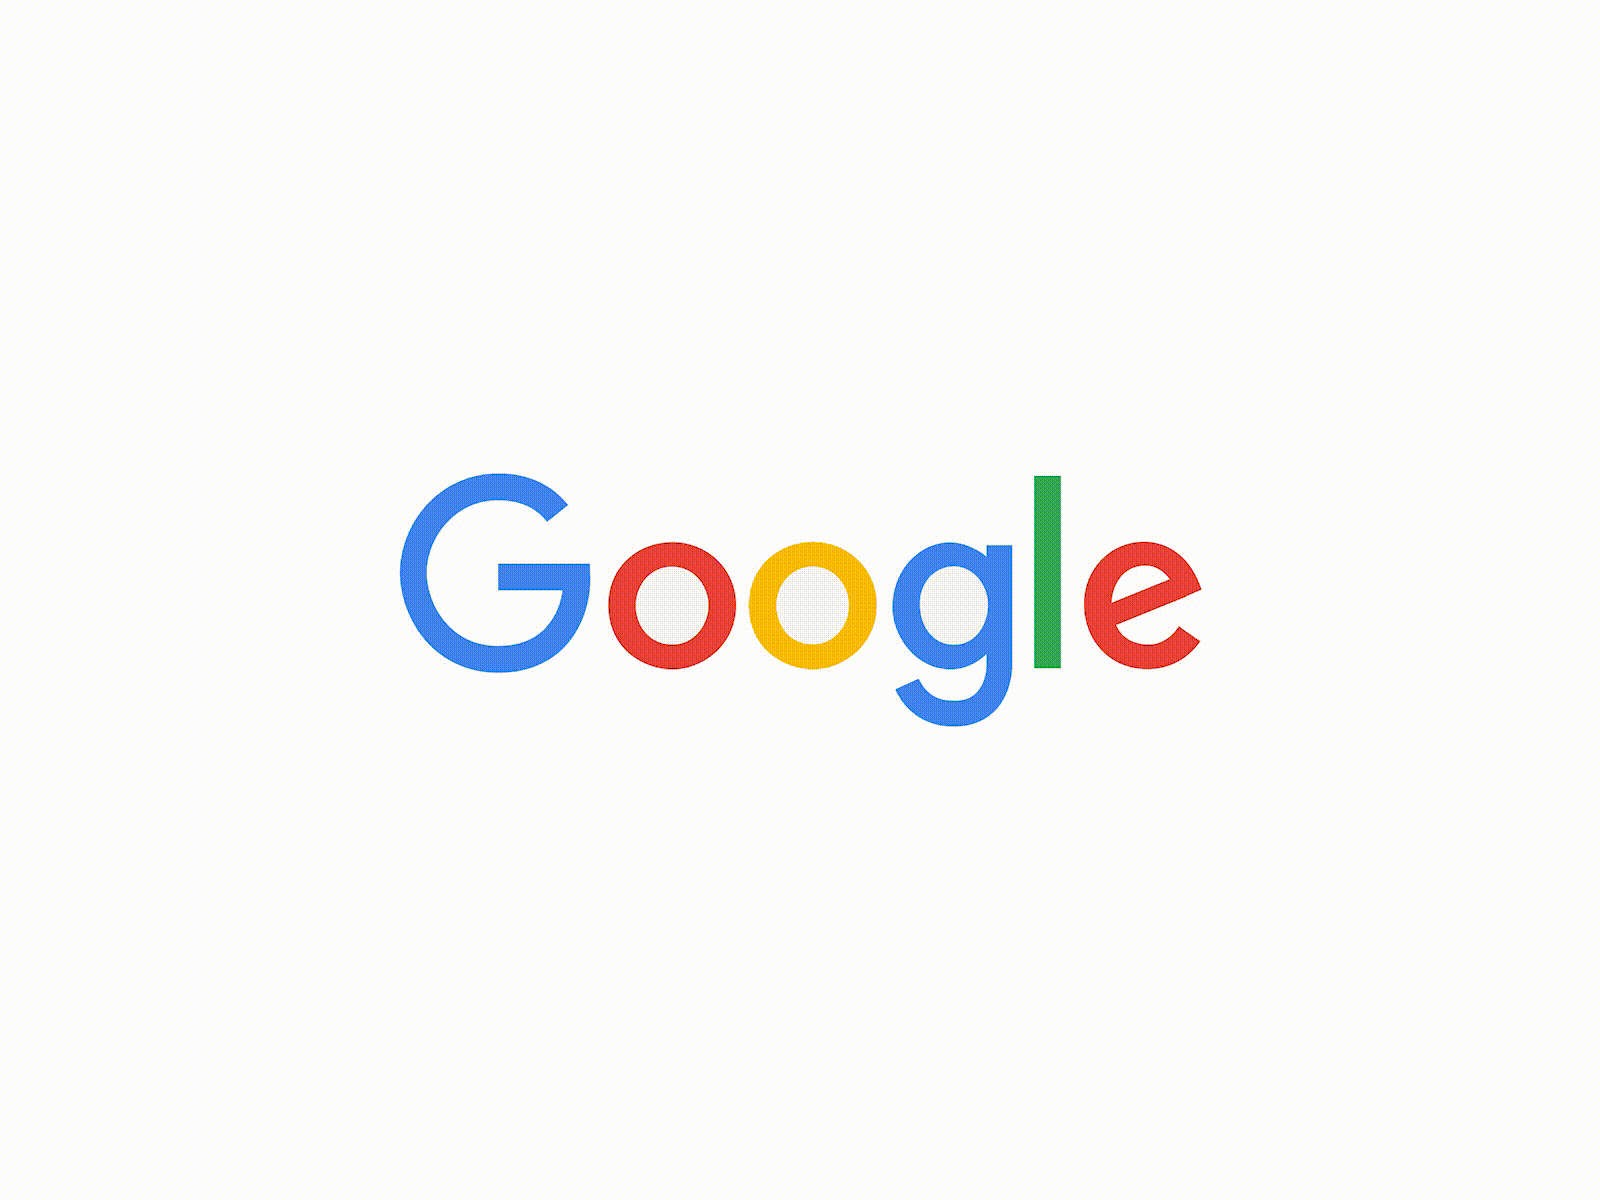 Google logo animation - Study